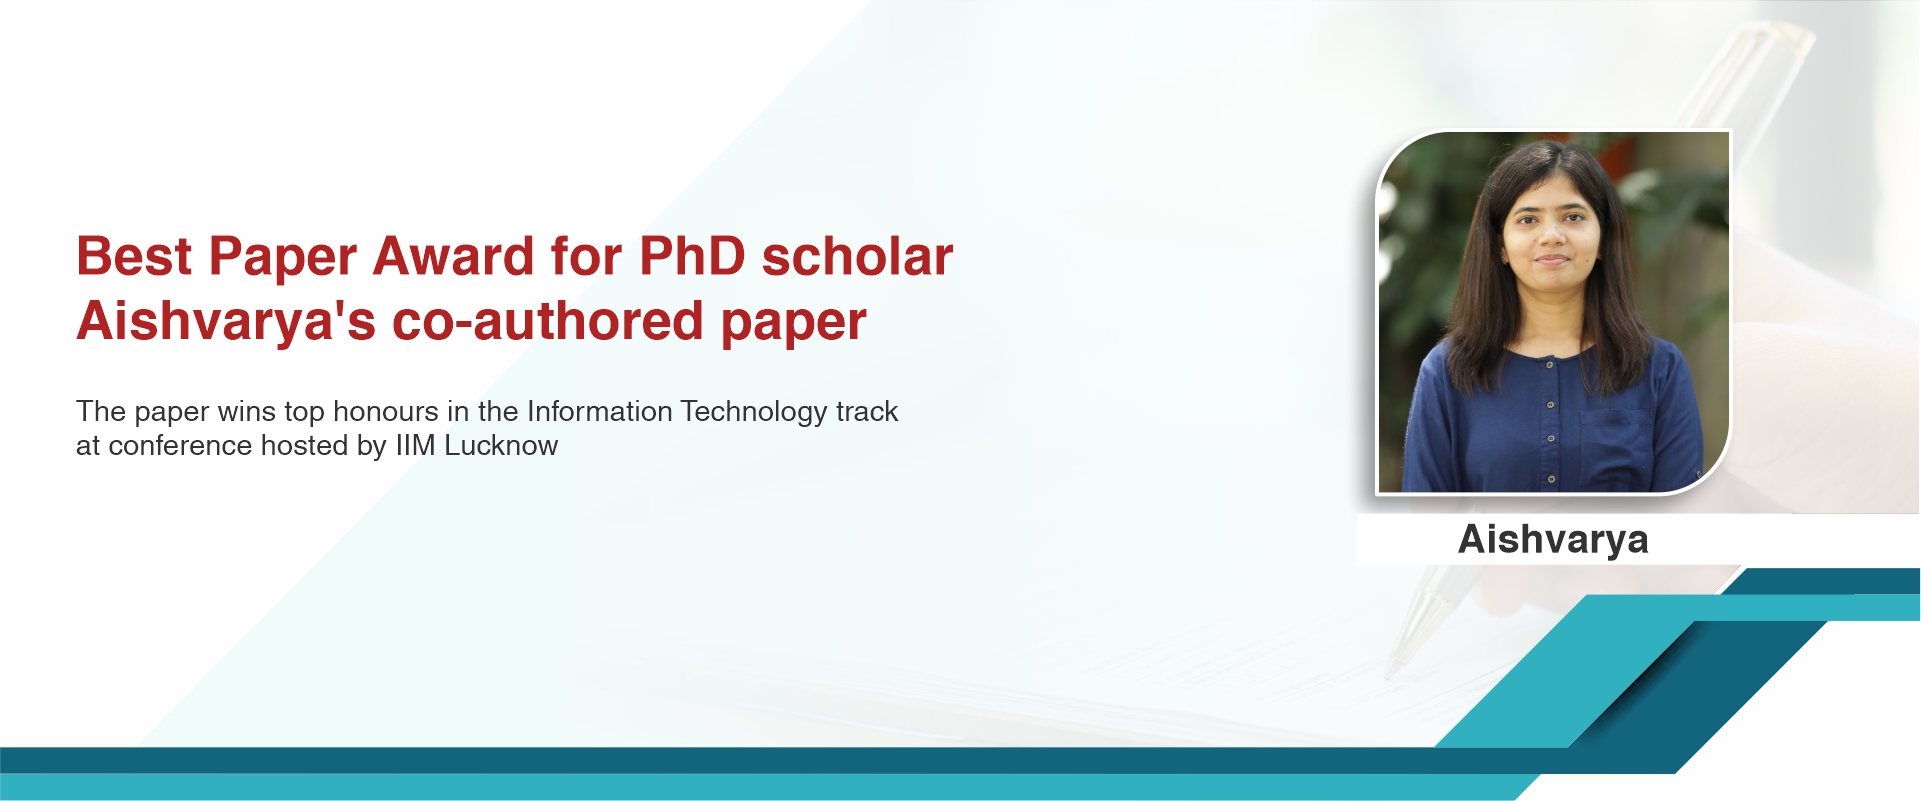 Best Paper Award for PhD scholar Aishvarya’s co-authored paper